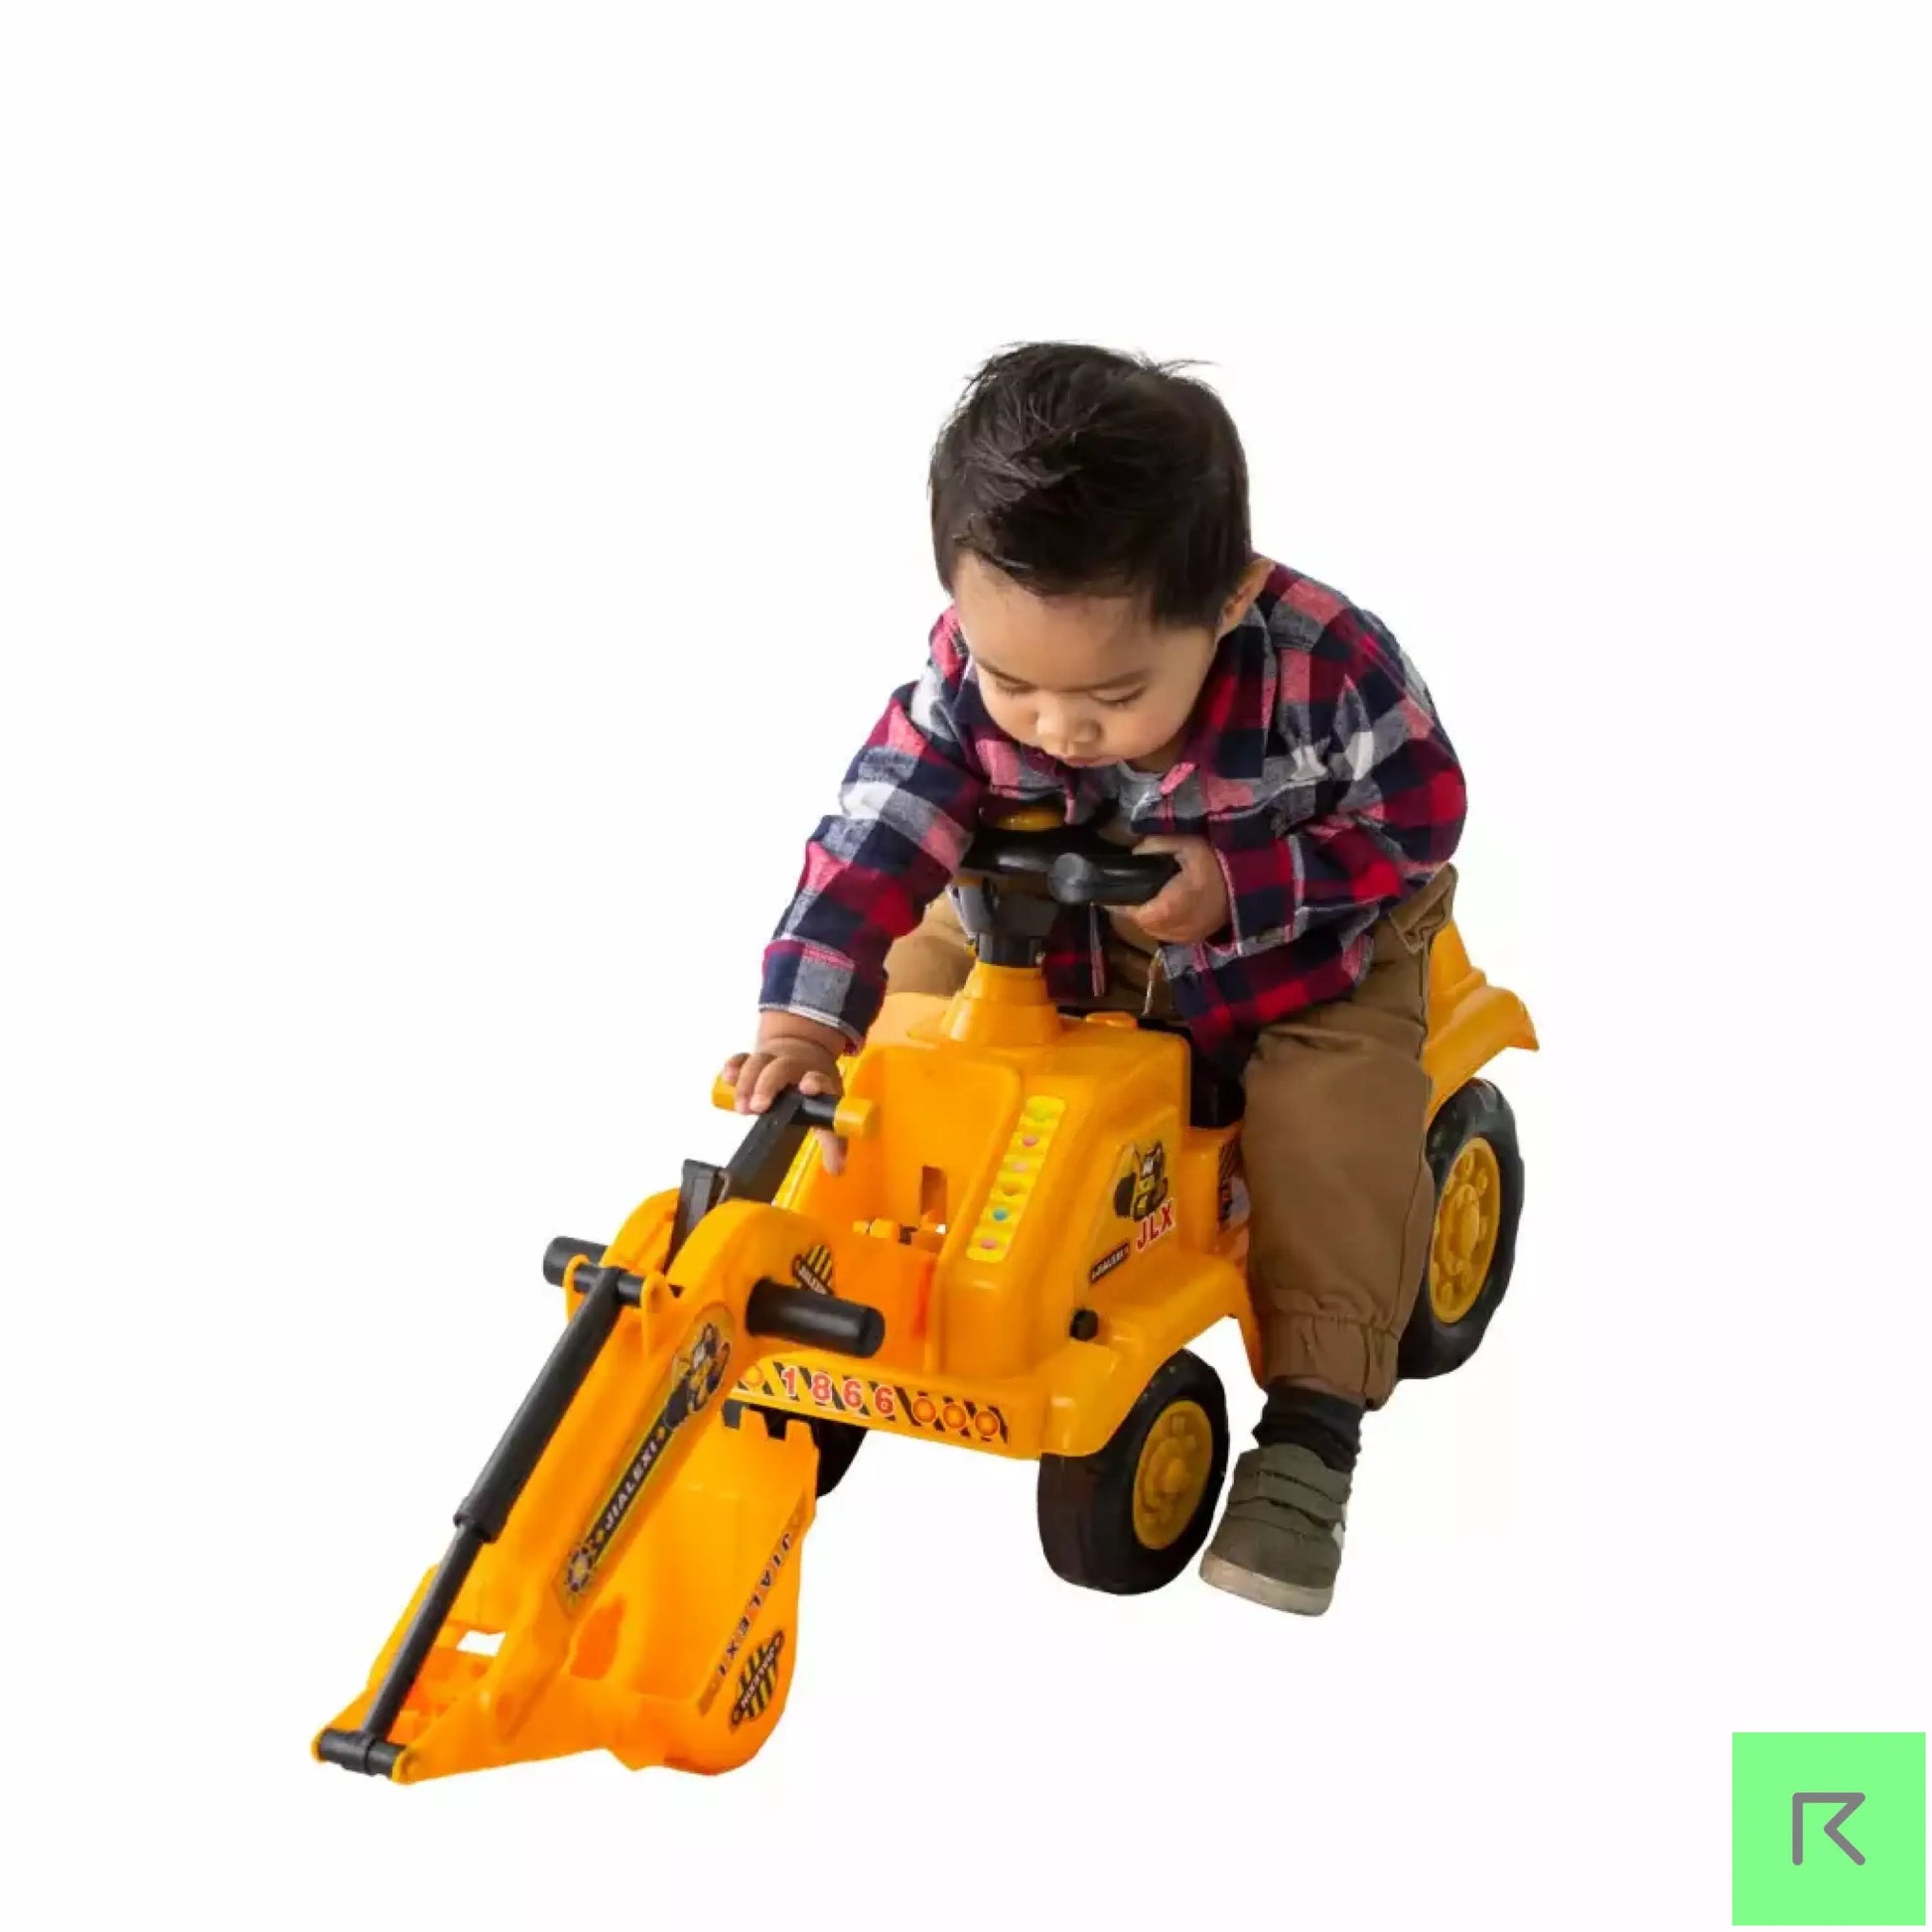 Ride-on Children’s Toy Excavator Truck (Yellow) - Baby &